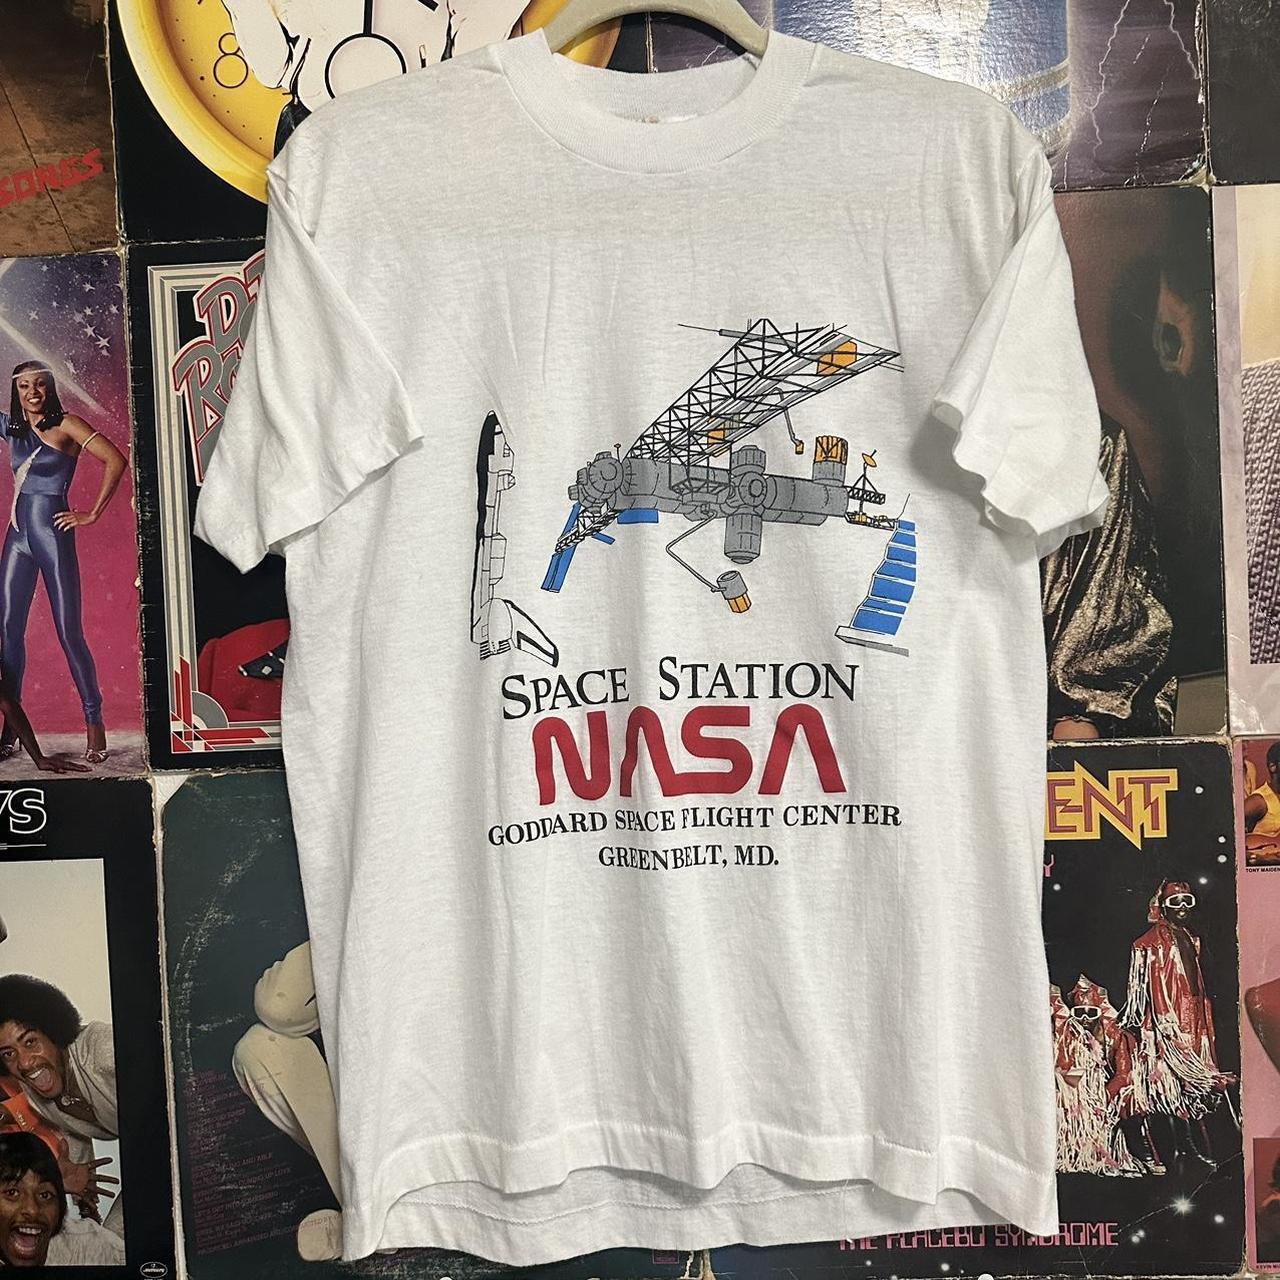 NASA Tee vintage ‘80sトップス